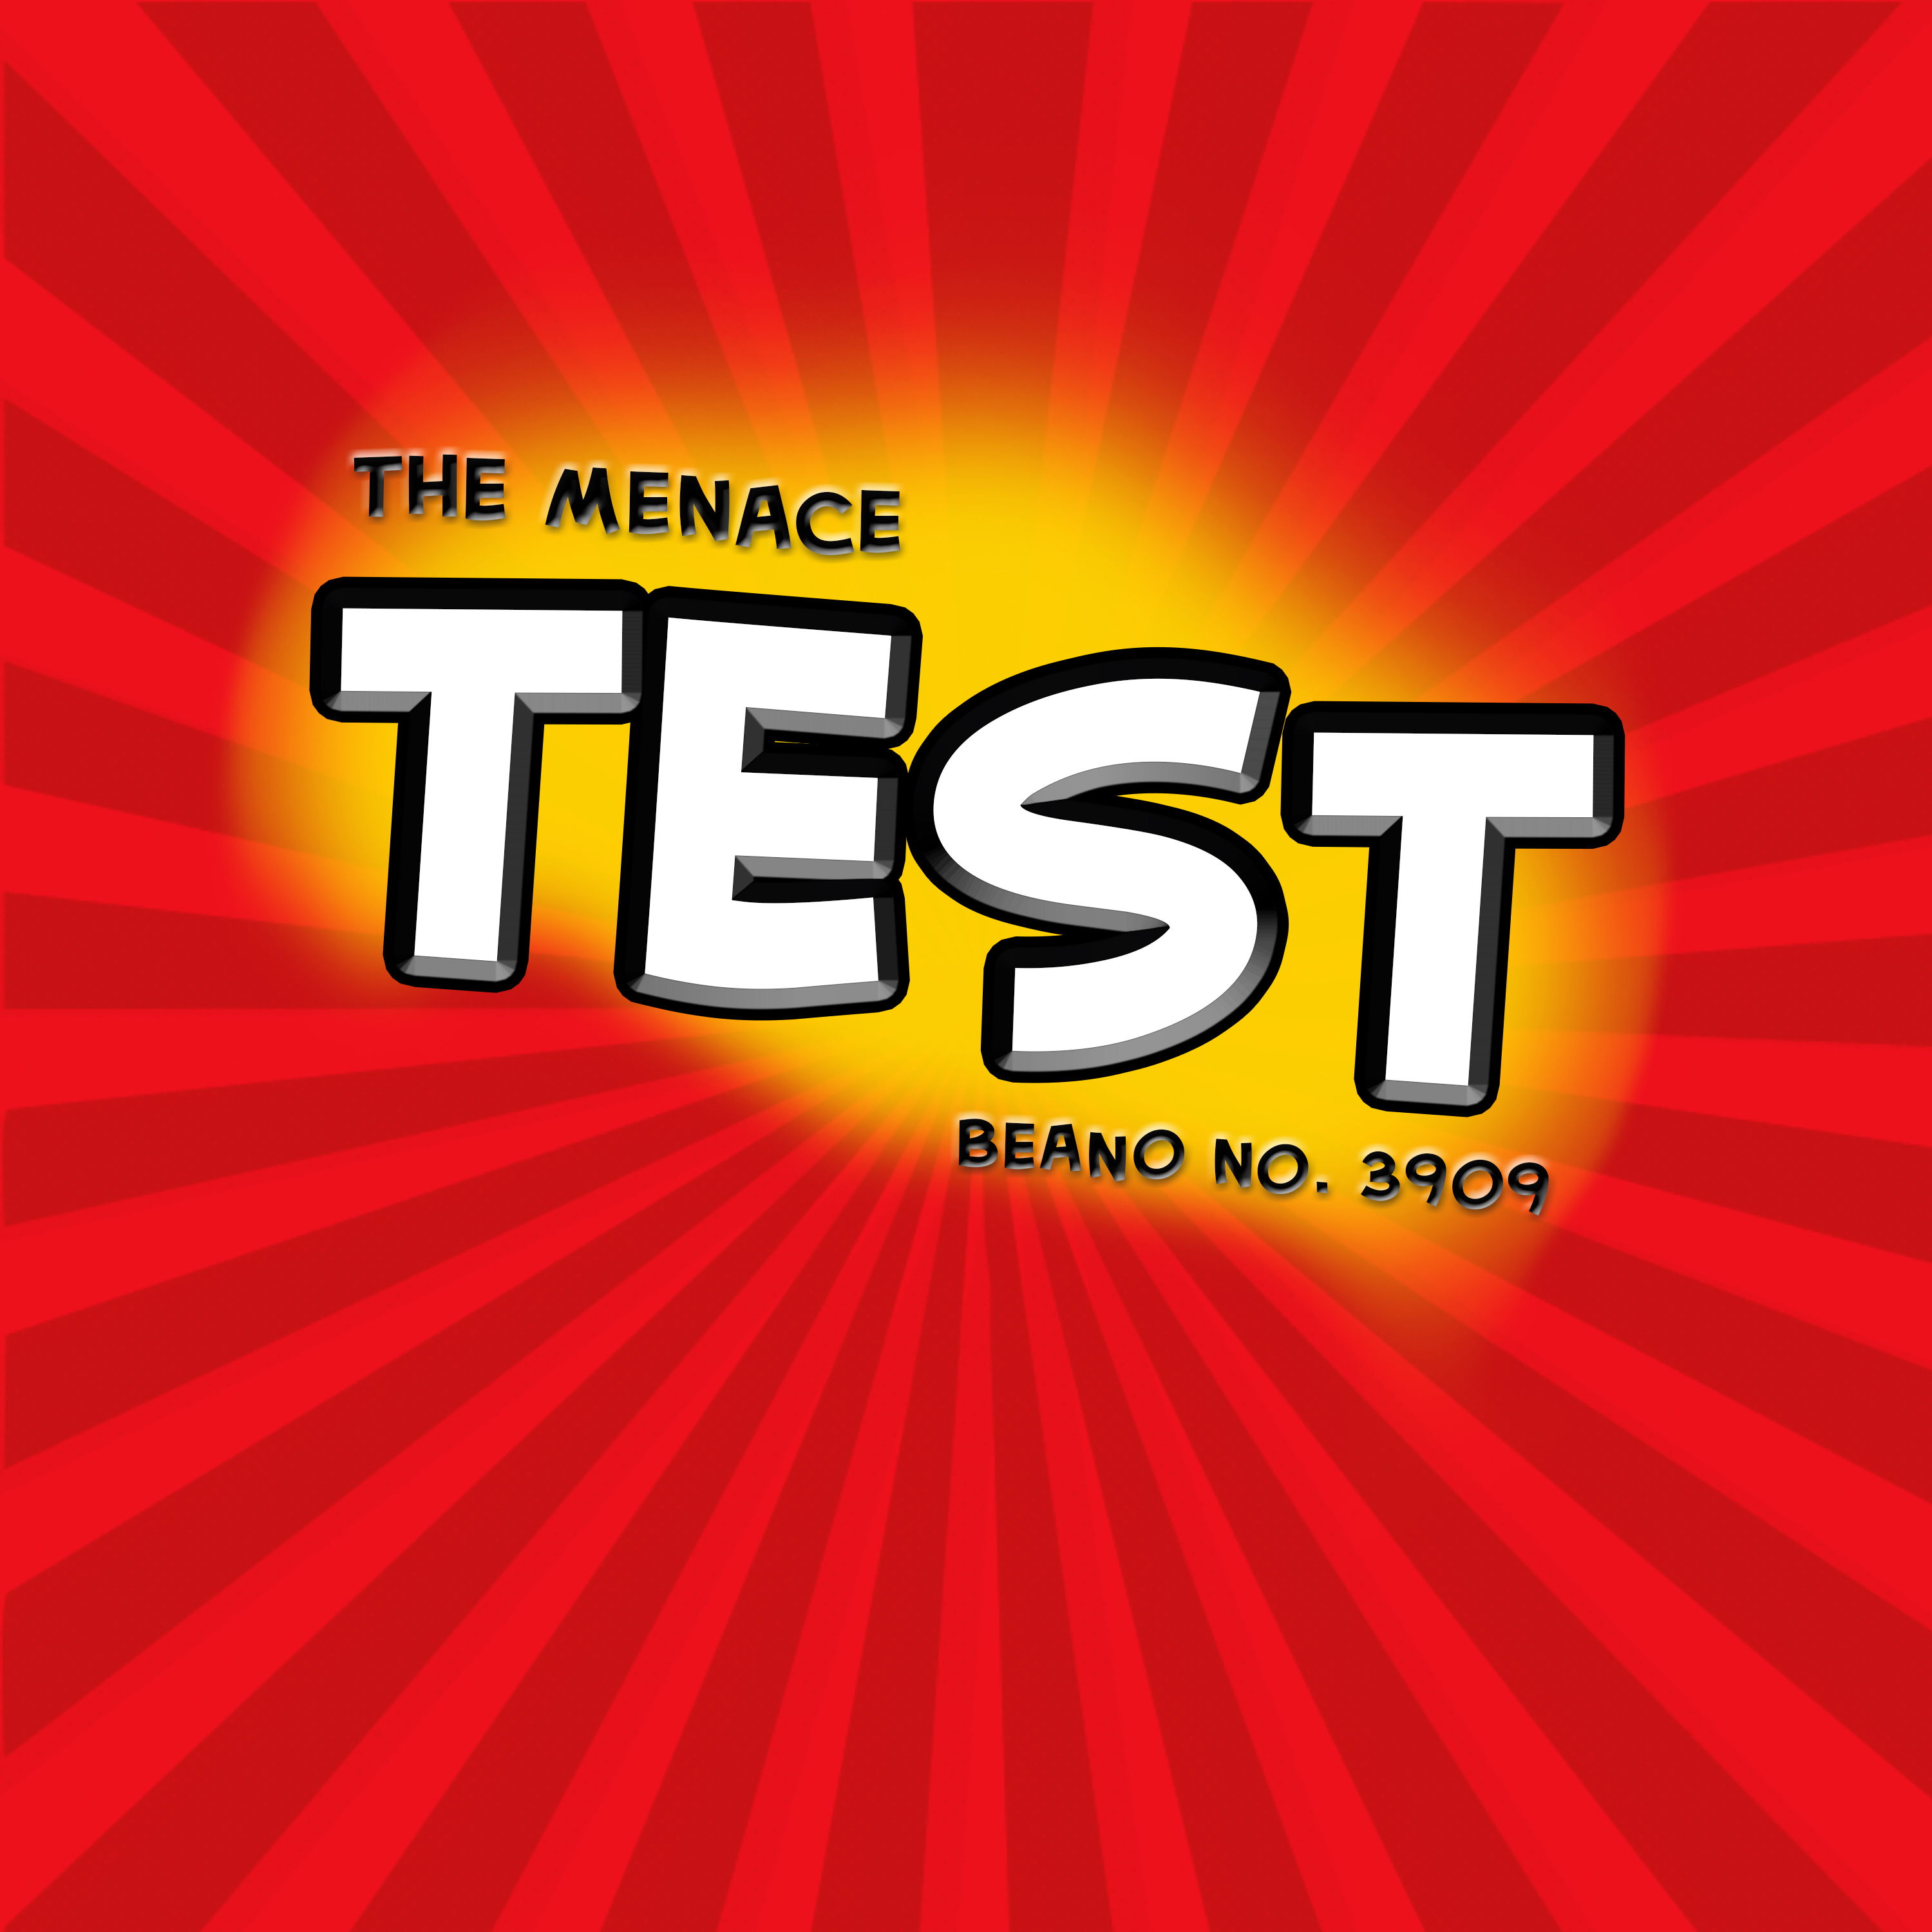 The Menace Test - Beano 3909